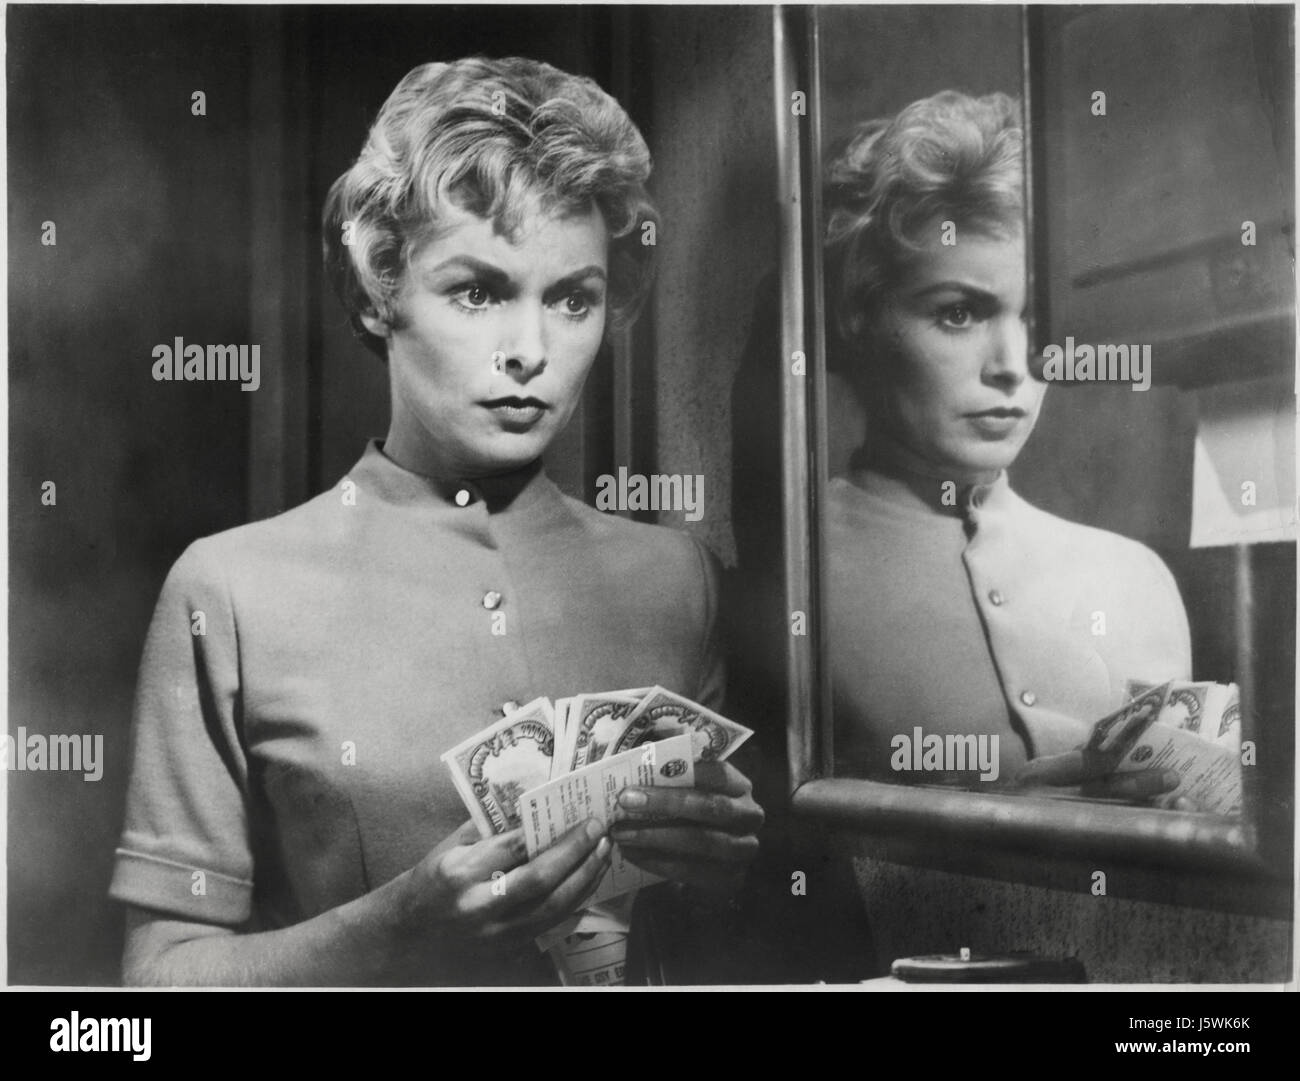 Janet Leigh, sul set del film "Psycho', 1960 Foto Stock